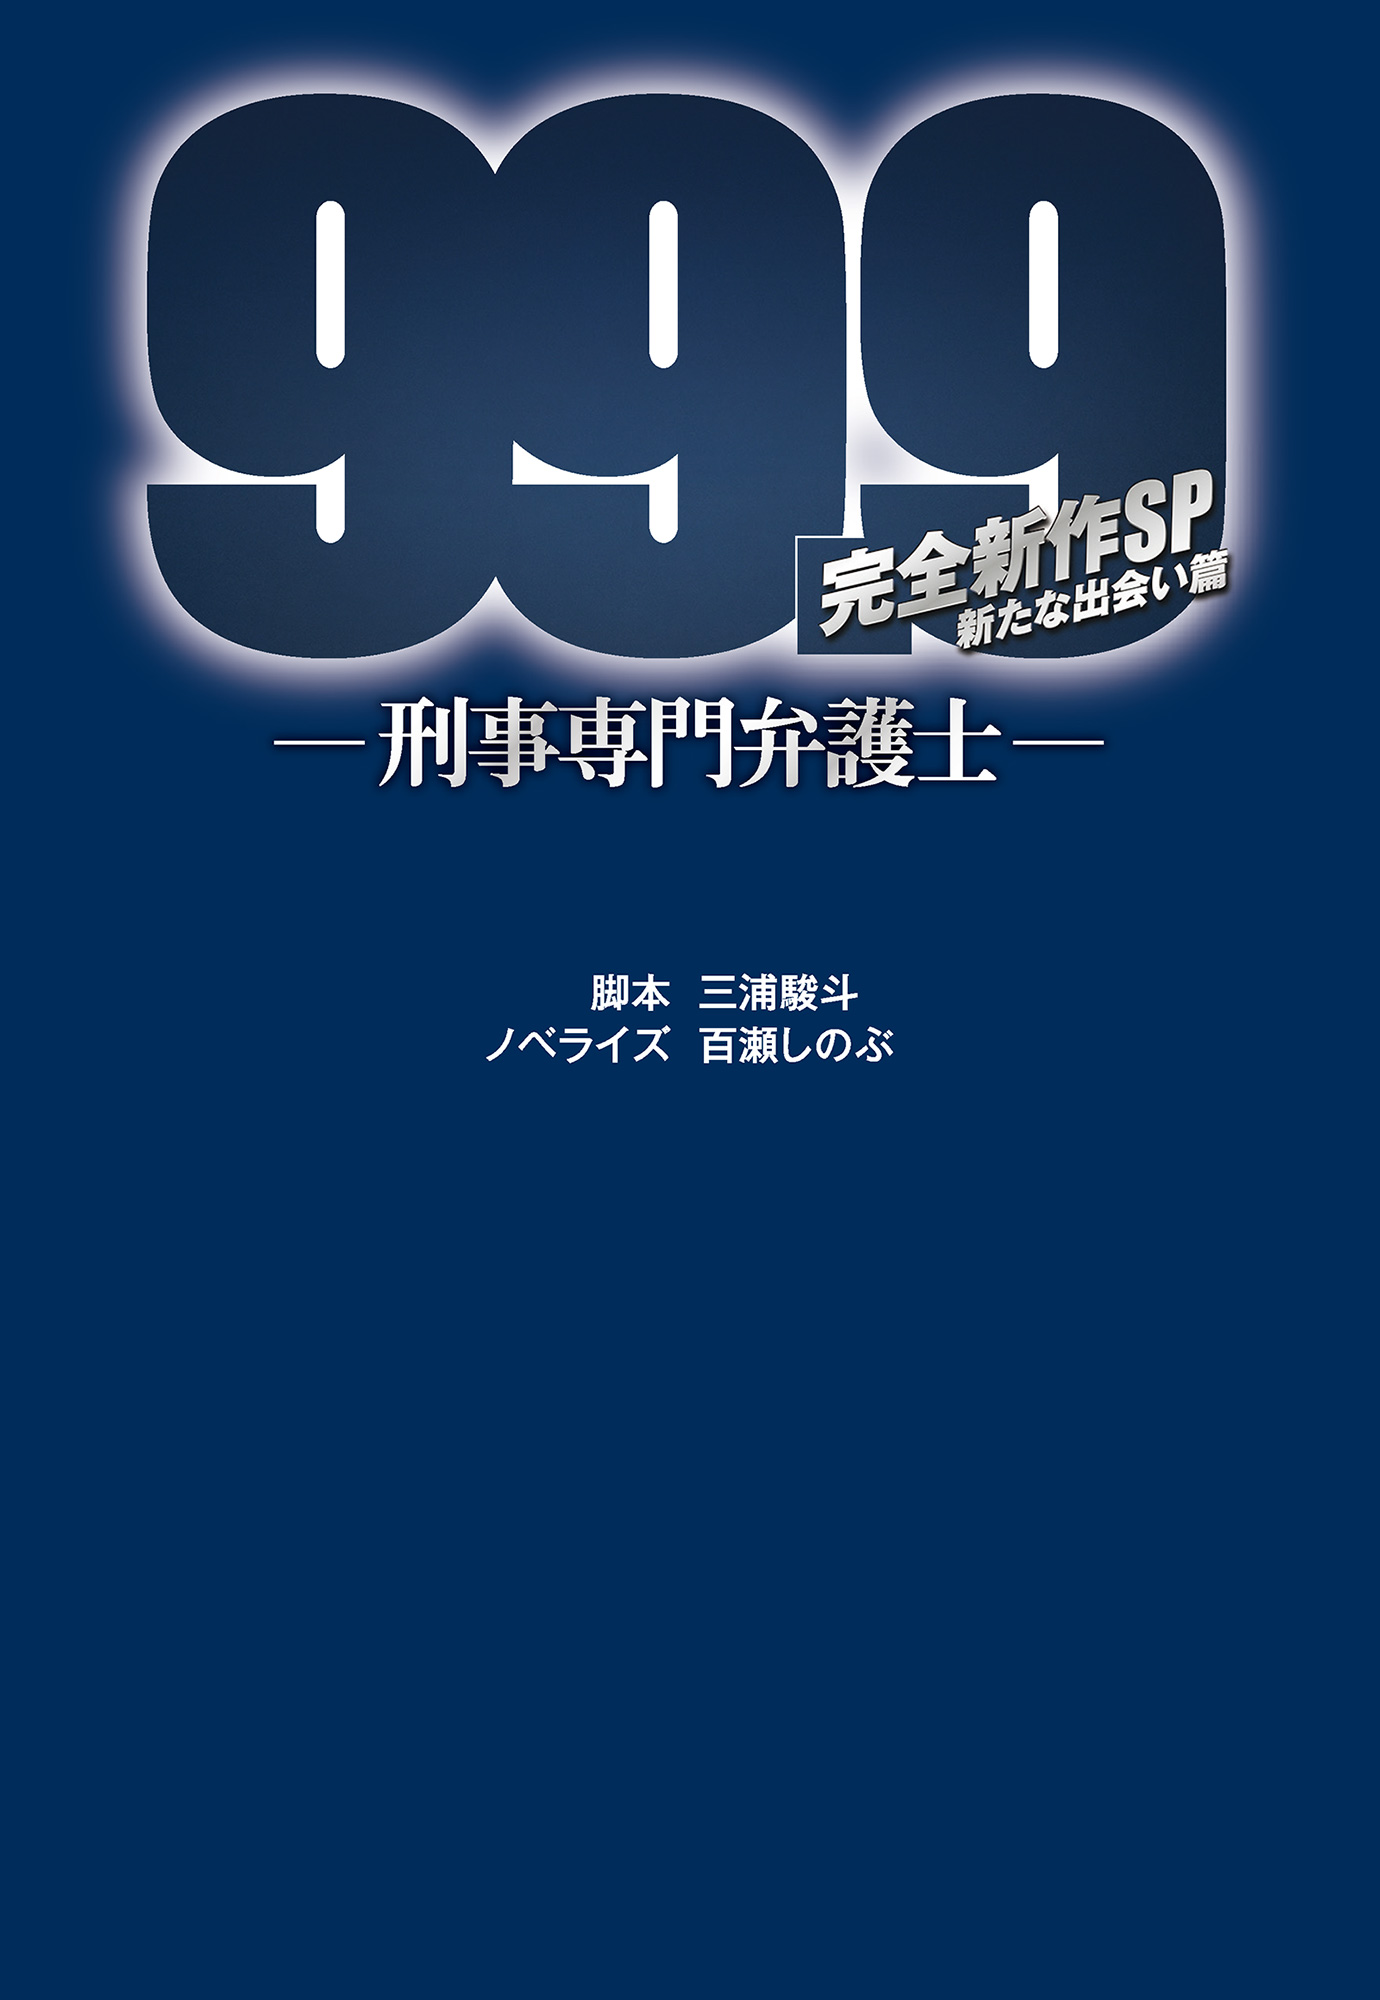 99.9－刑事専門弁護士－ 完全新作SP 新たな出会い篇 - 三浦駿斗/百瀬 ...